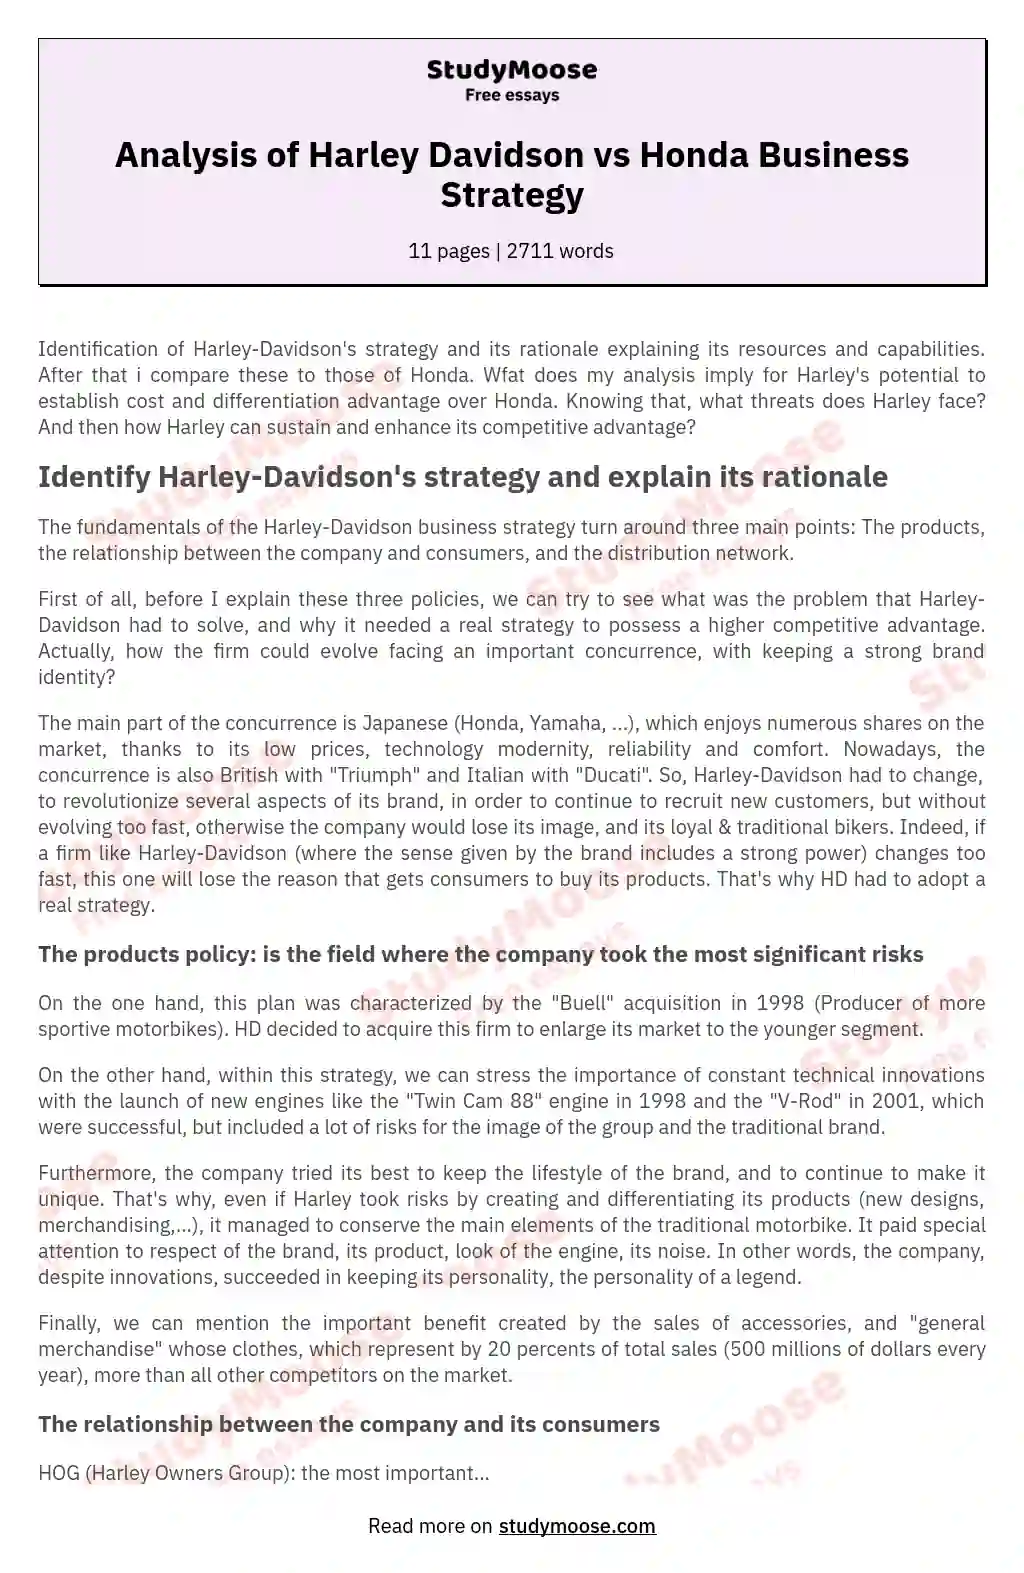 Analysis of Harley Davidson vs Honda Business Strategy